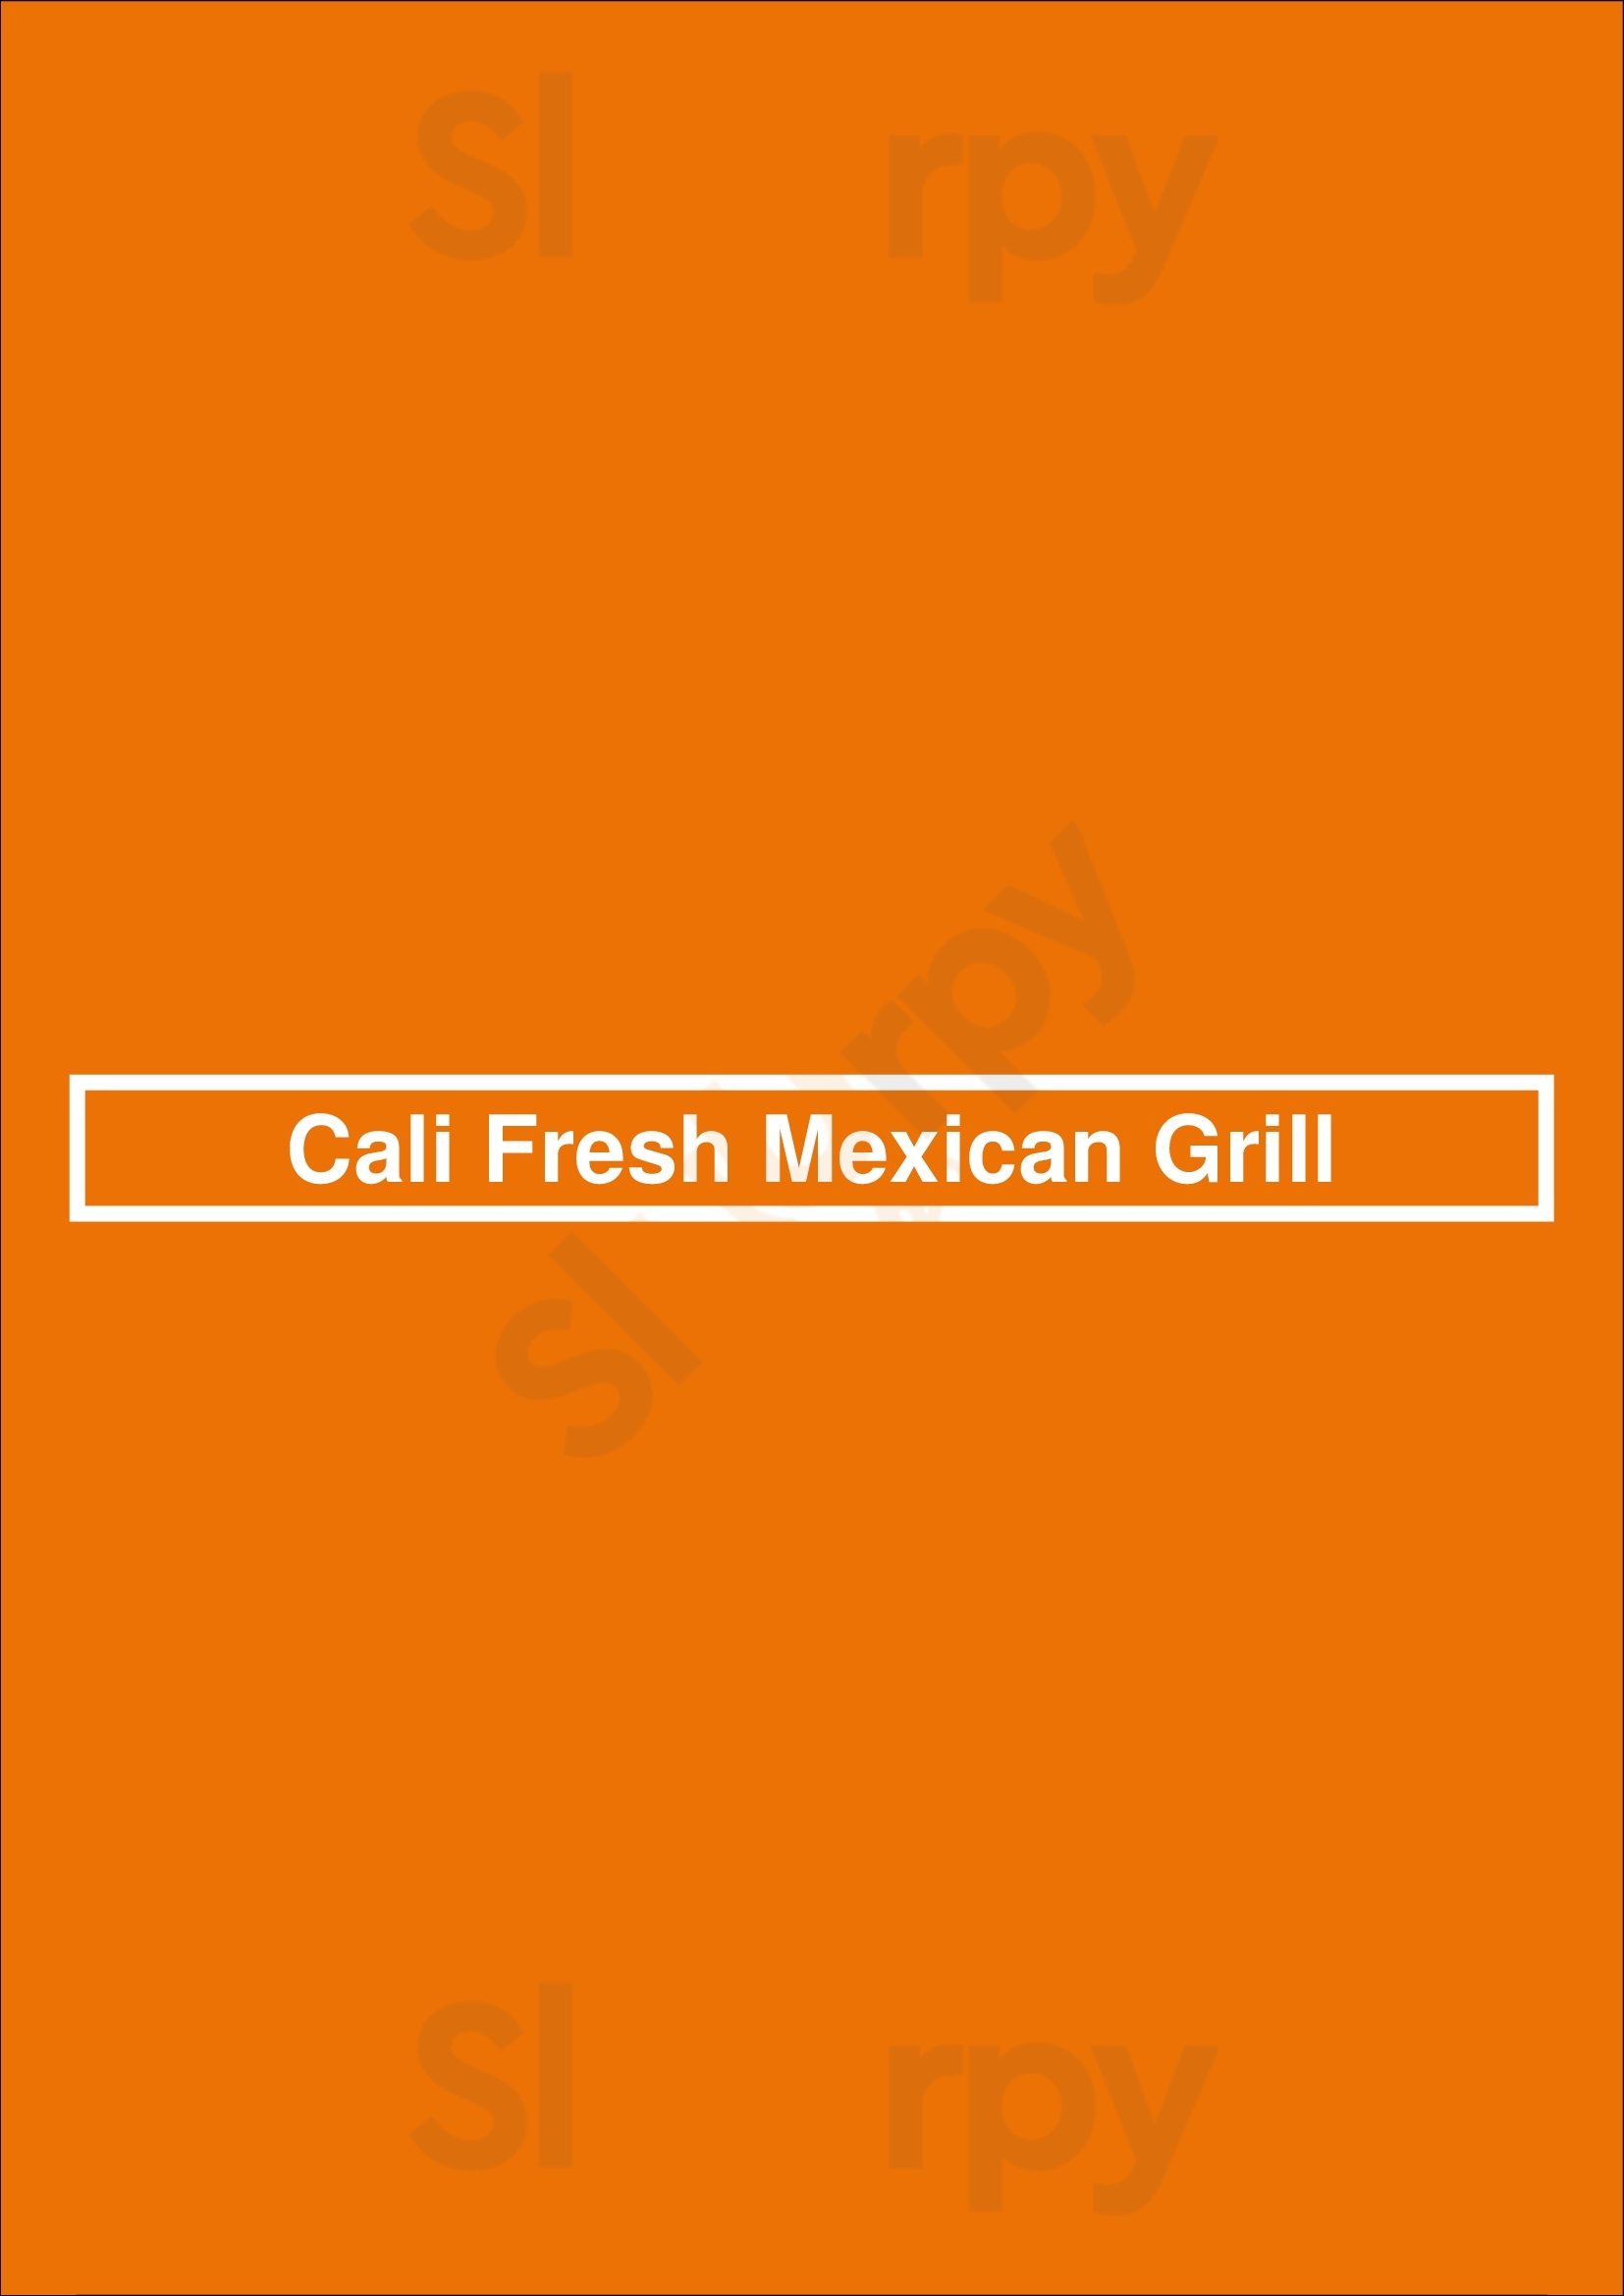 Cali Fresh Mexican Grill Los Angeles Menu - 1